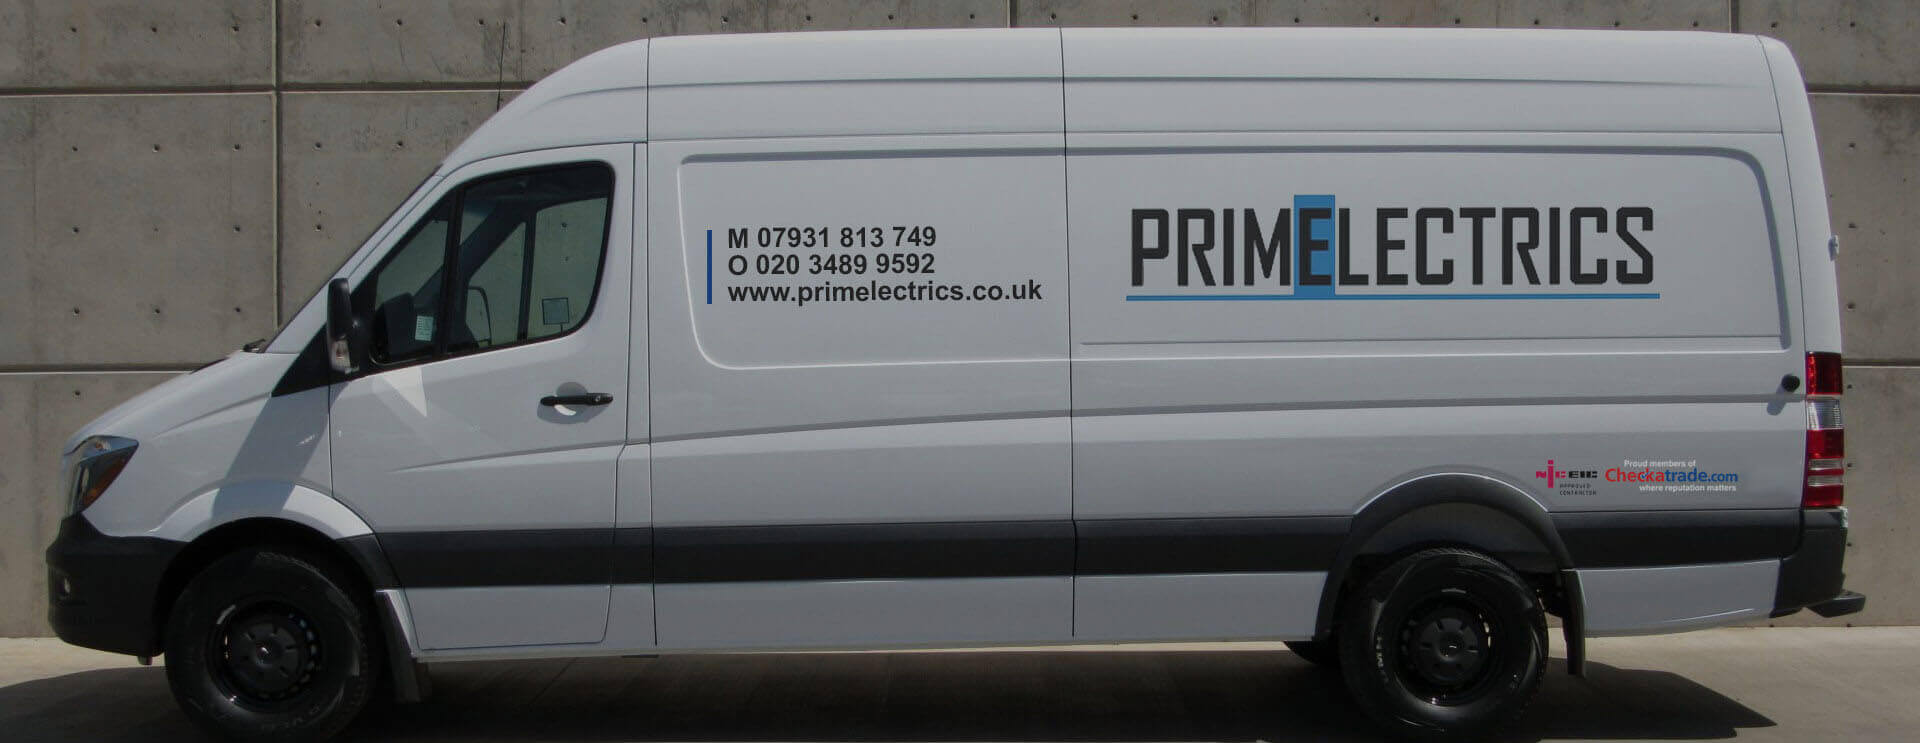 Primelectrics' mid-sized white van